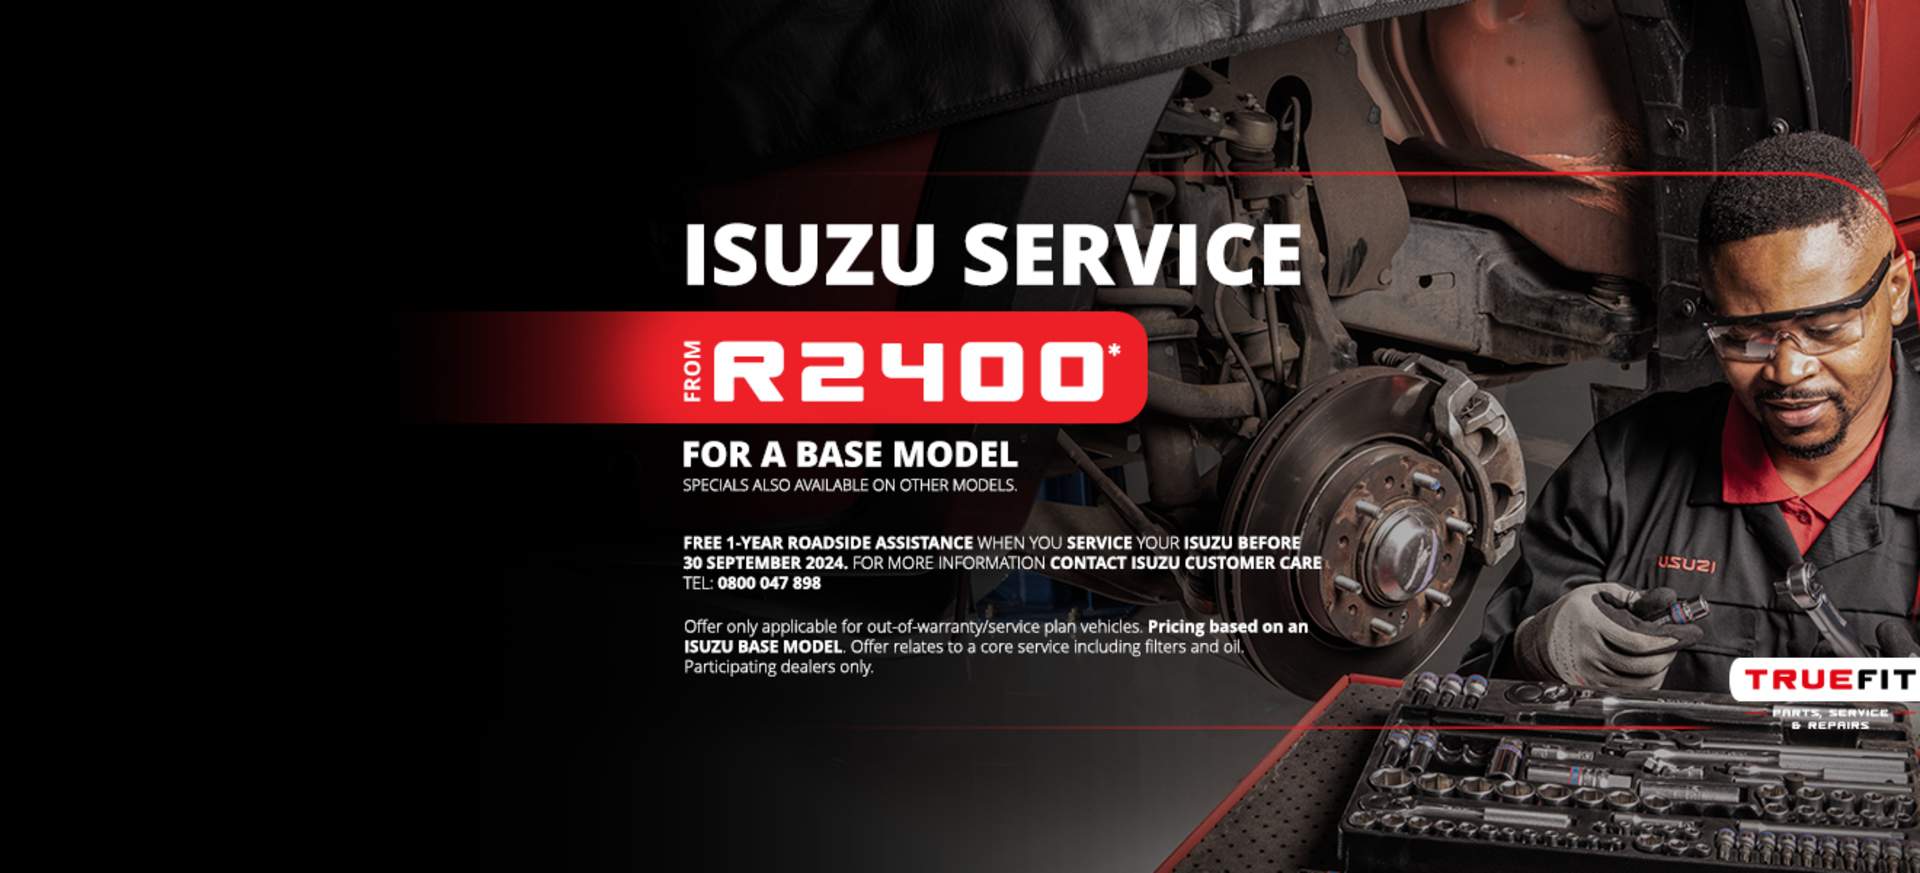 ISUZU True Fit Service Offer from R2400*